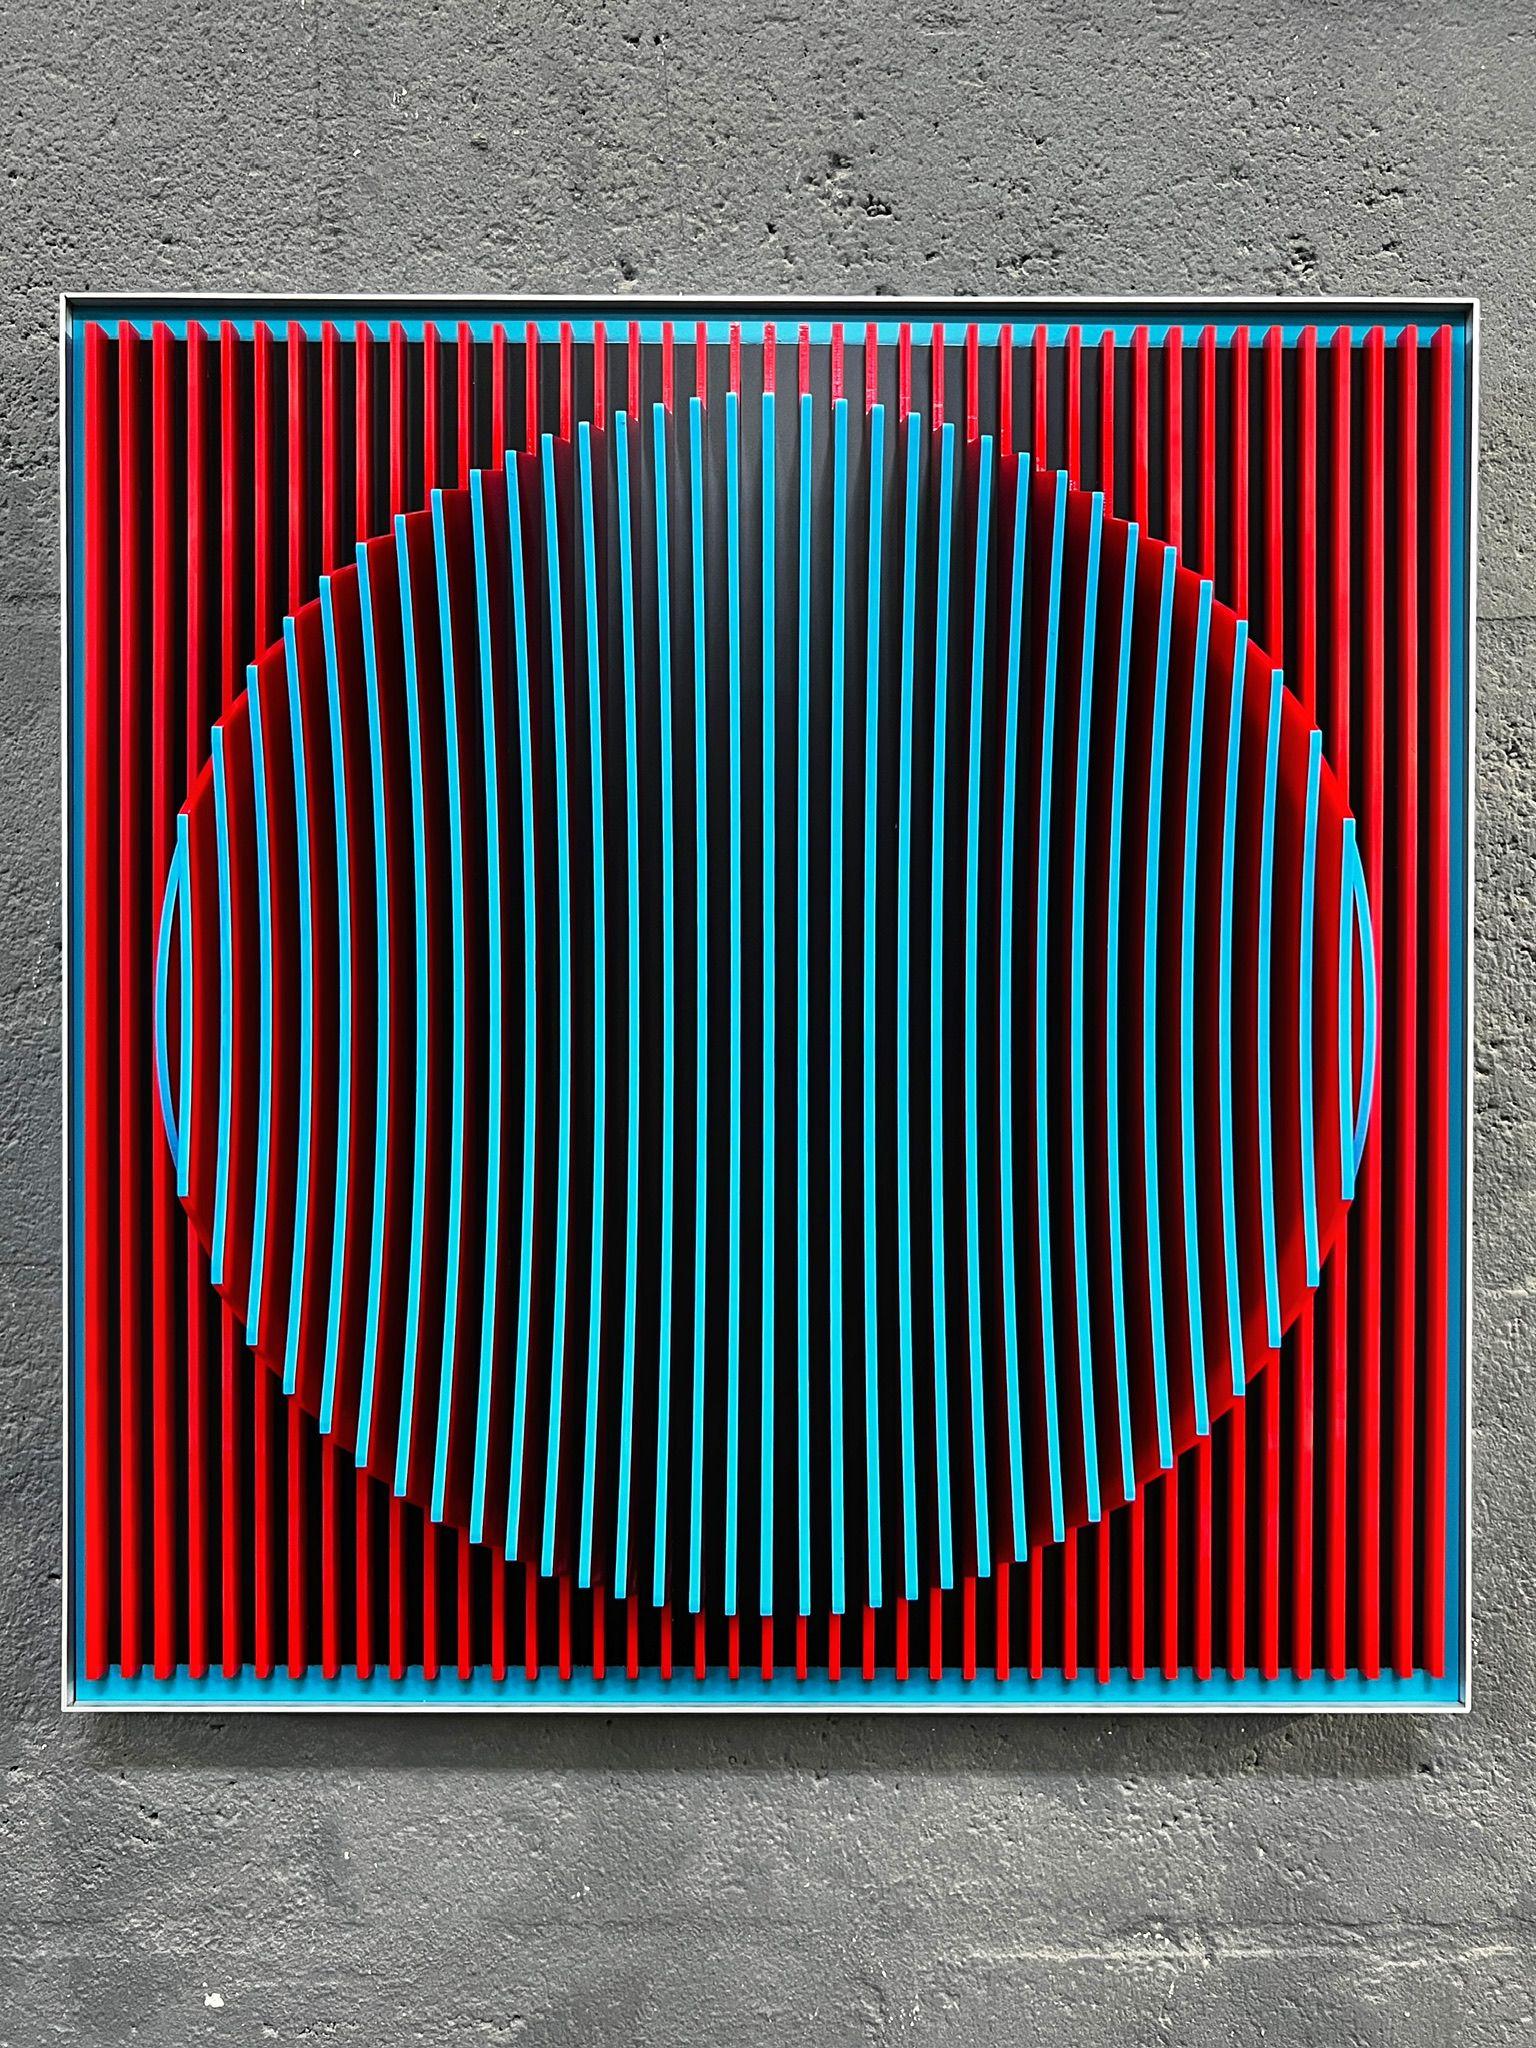 Jose Margulis Abstract Sculpture – Mini-Mond 1.5 – J. Margulis – kinetische Wandskulptur 